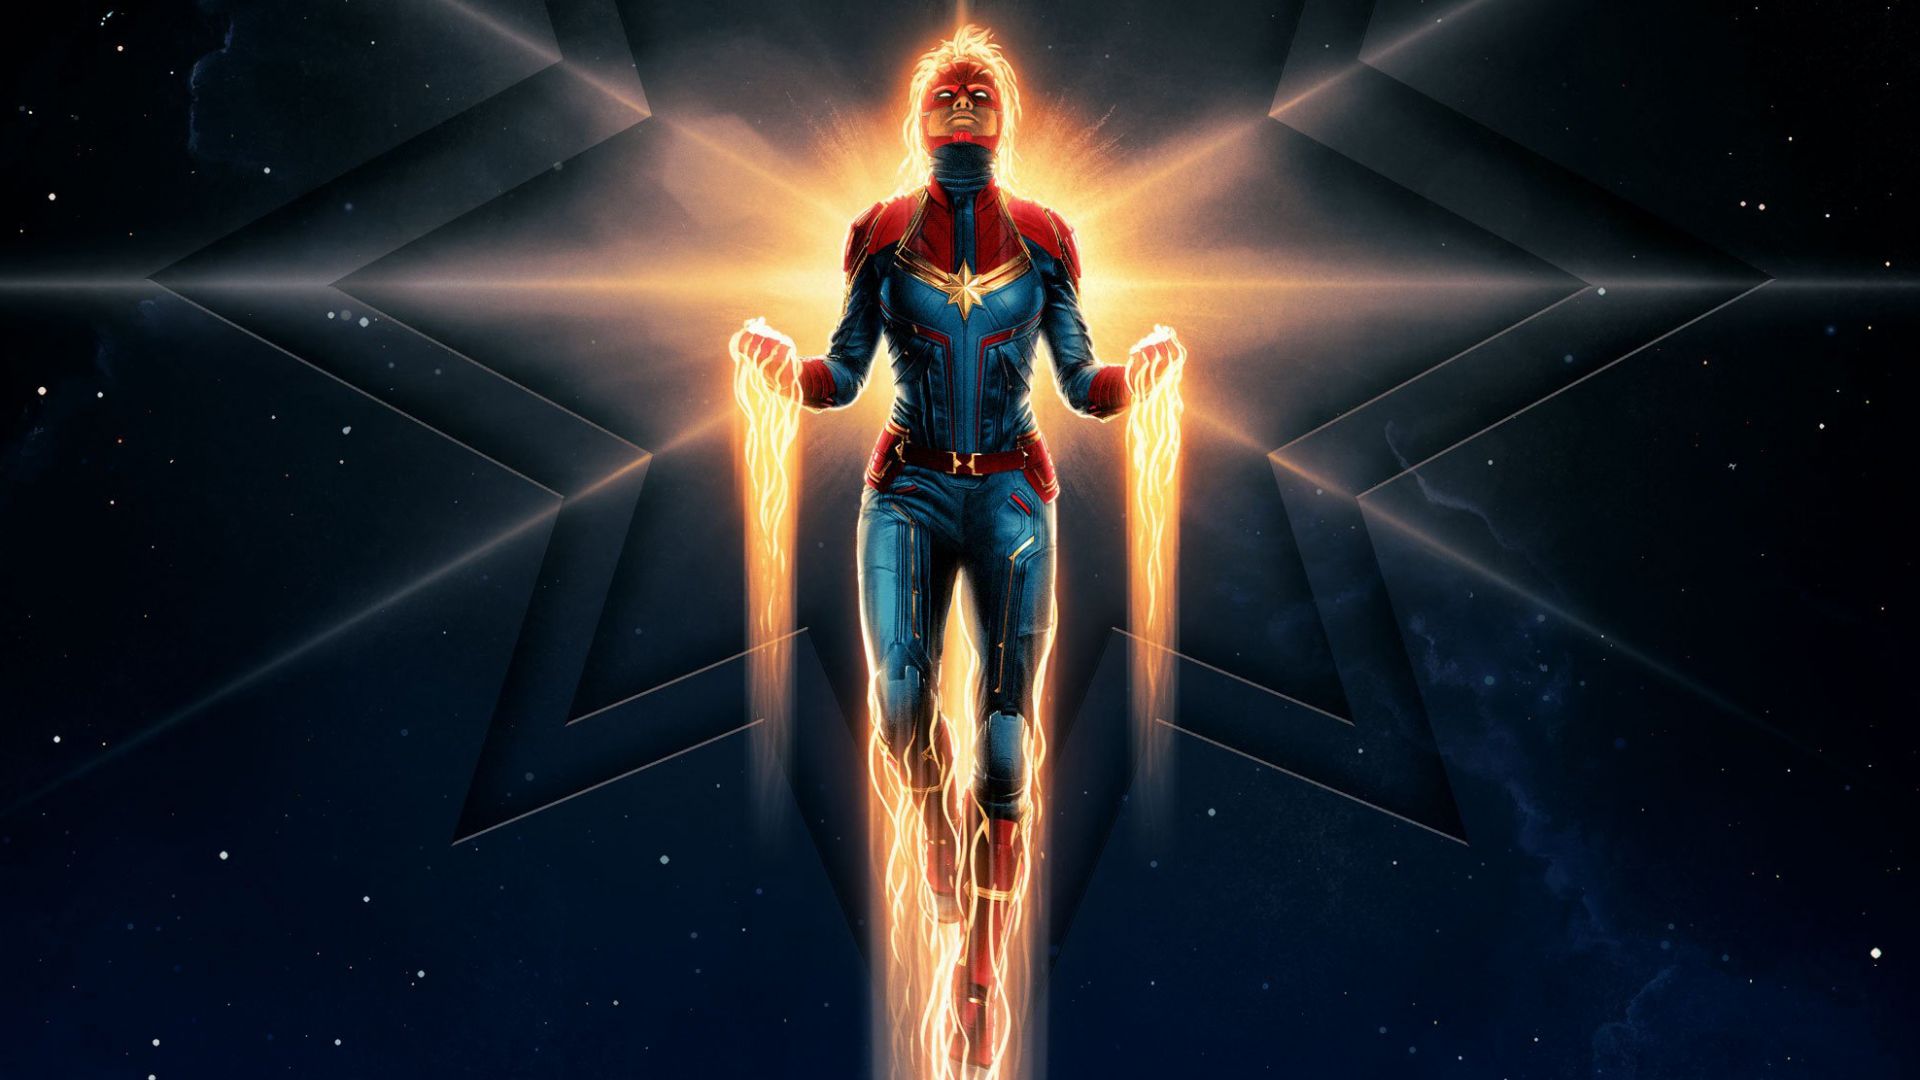 Poster, captain marvel, movie, legendary superhero, 2019 wallpaper, HD image, picture, background, e38186